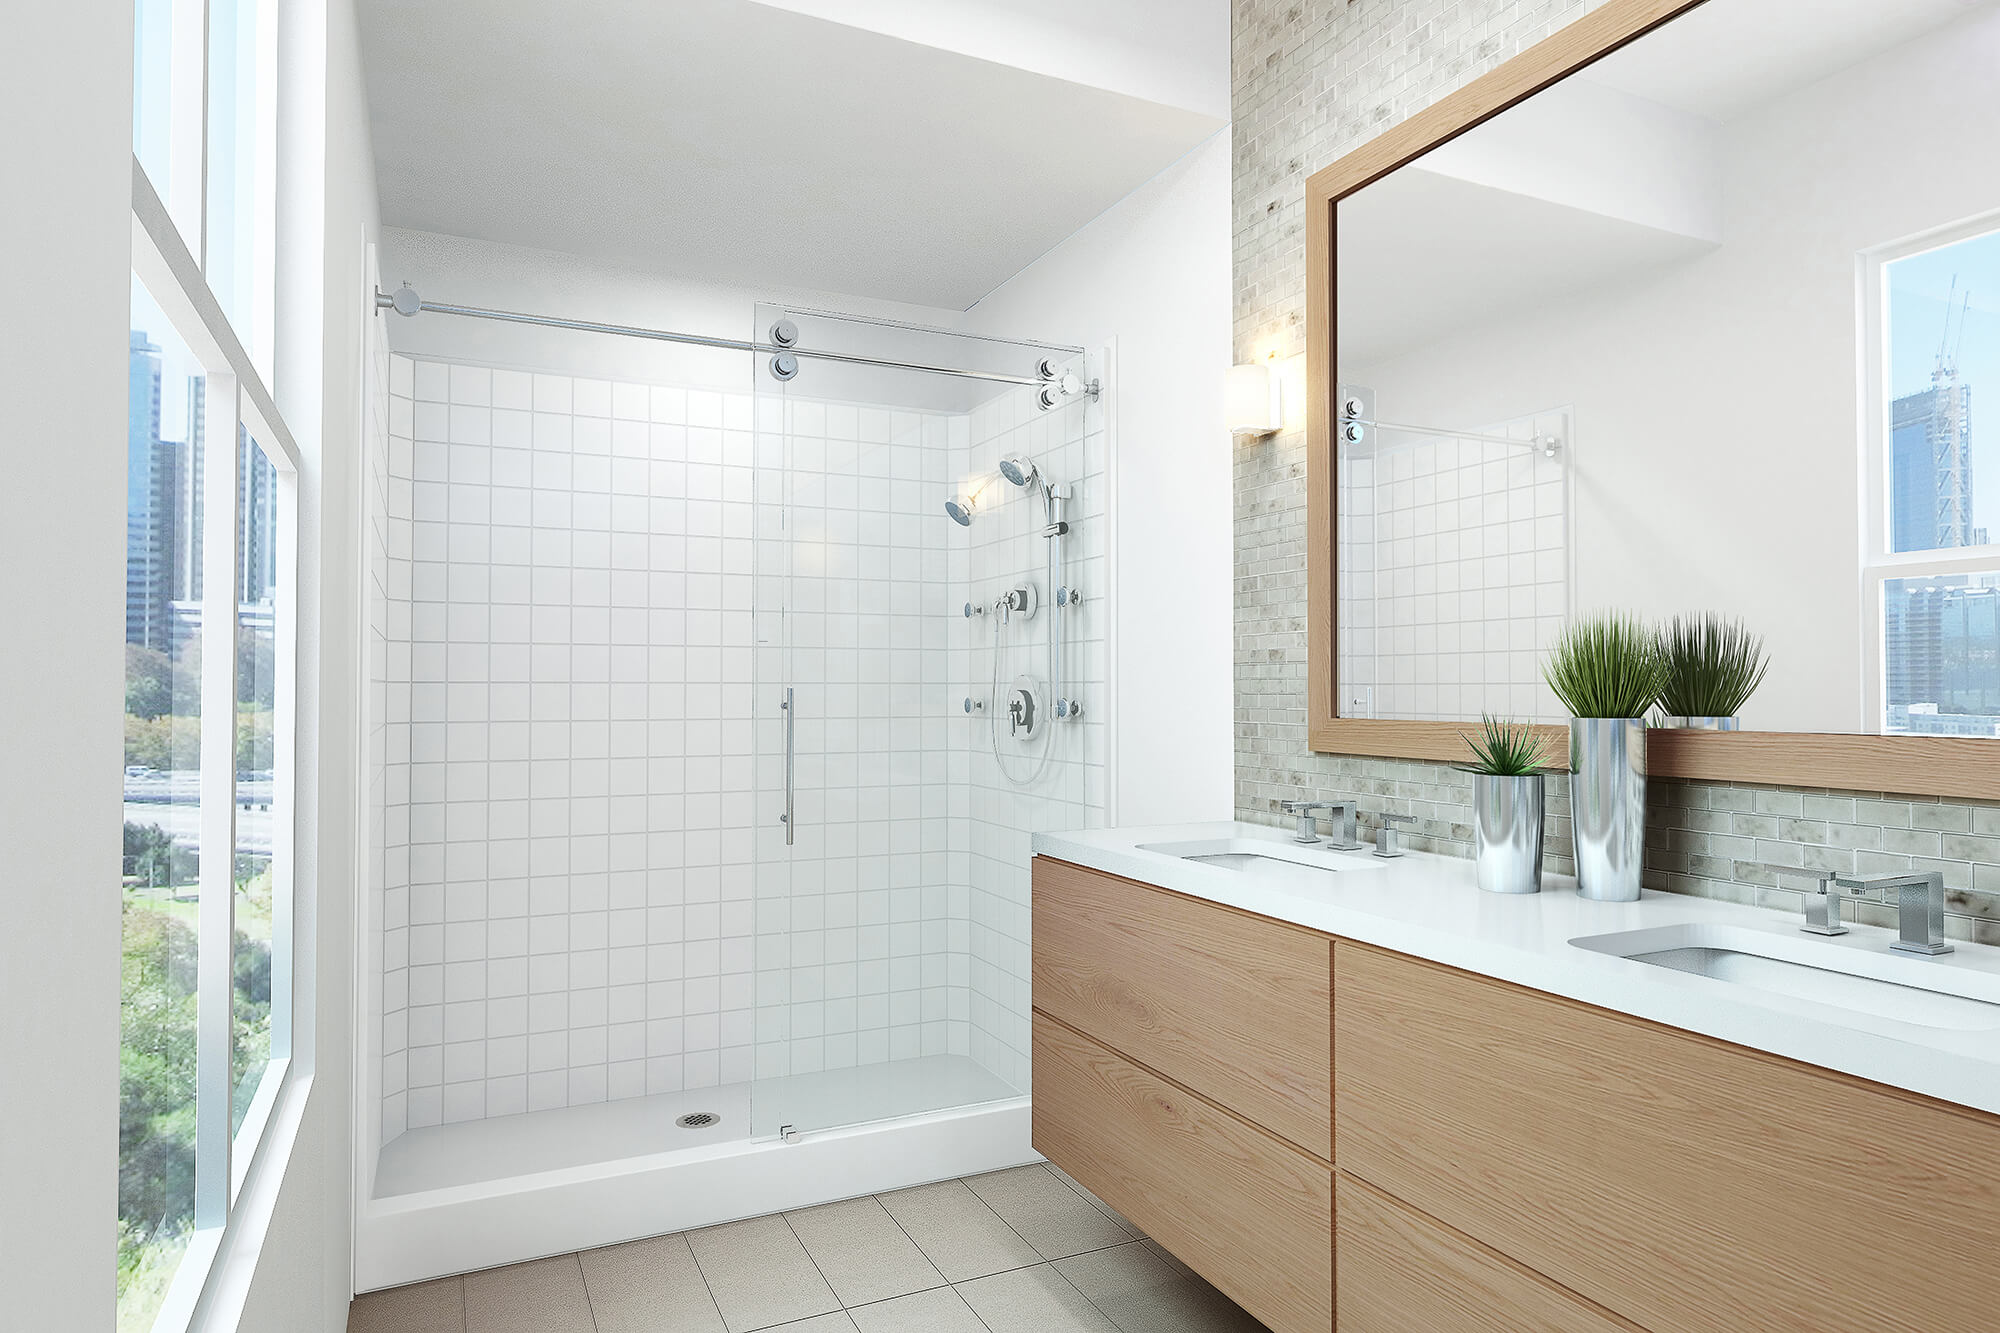 10 Tips to Create a Timeless Bathroom Design